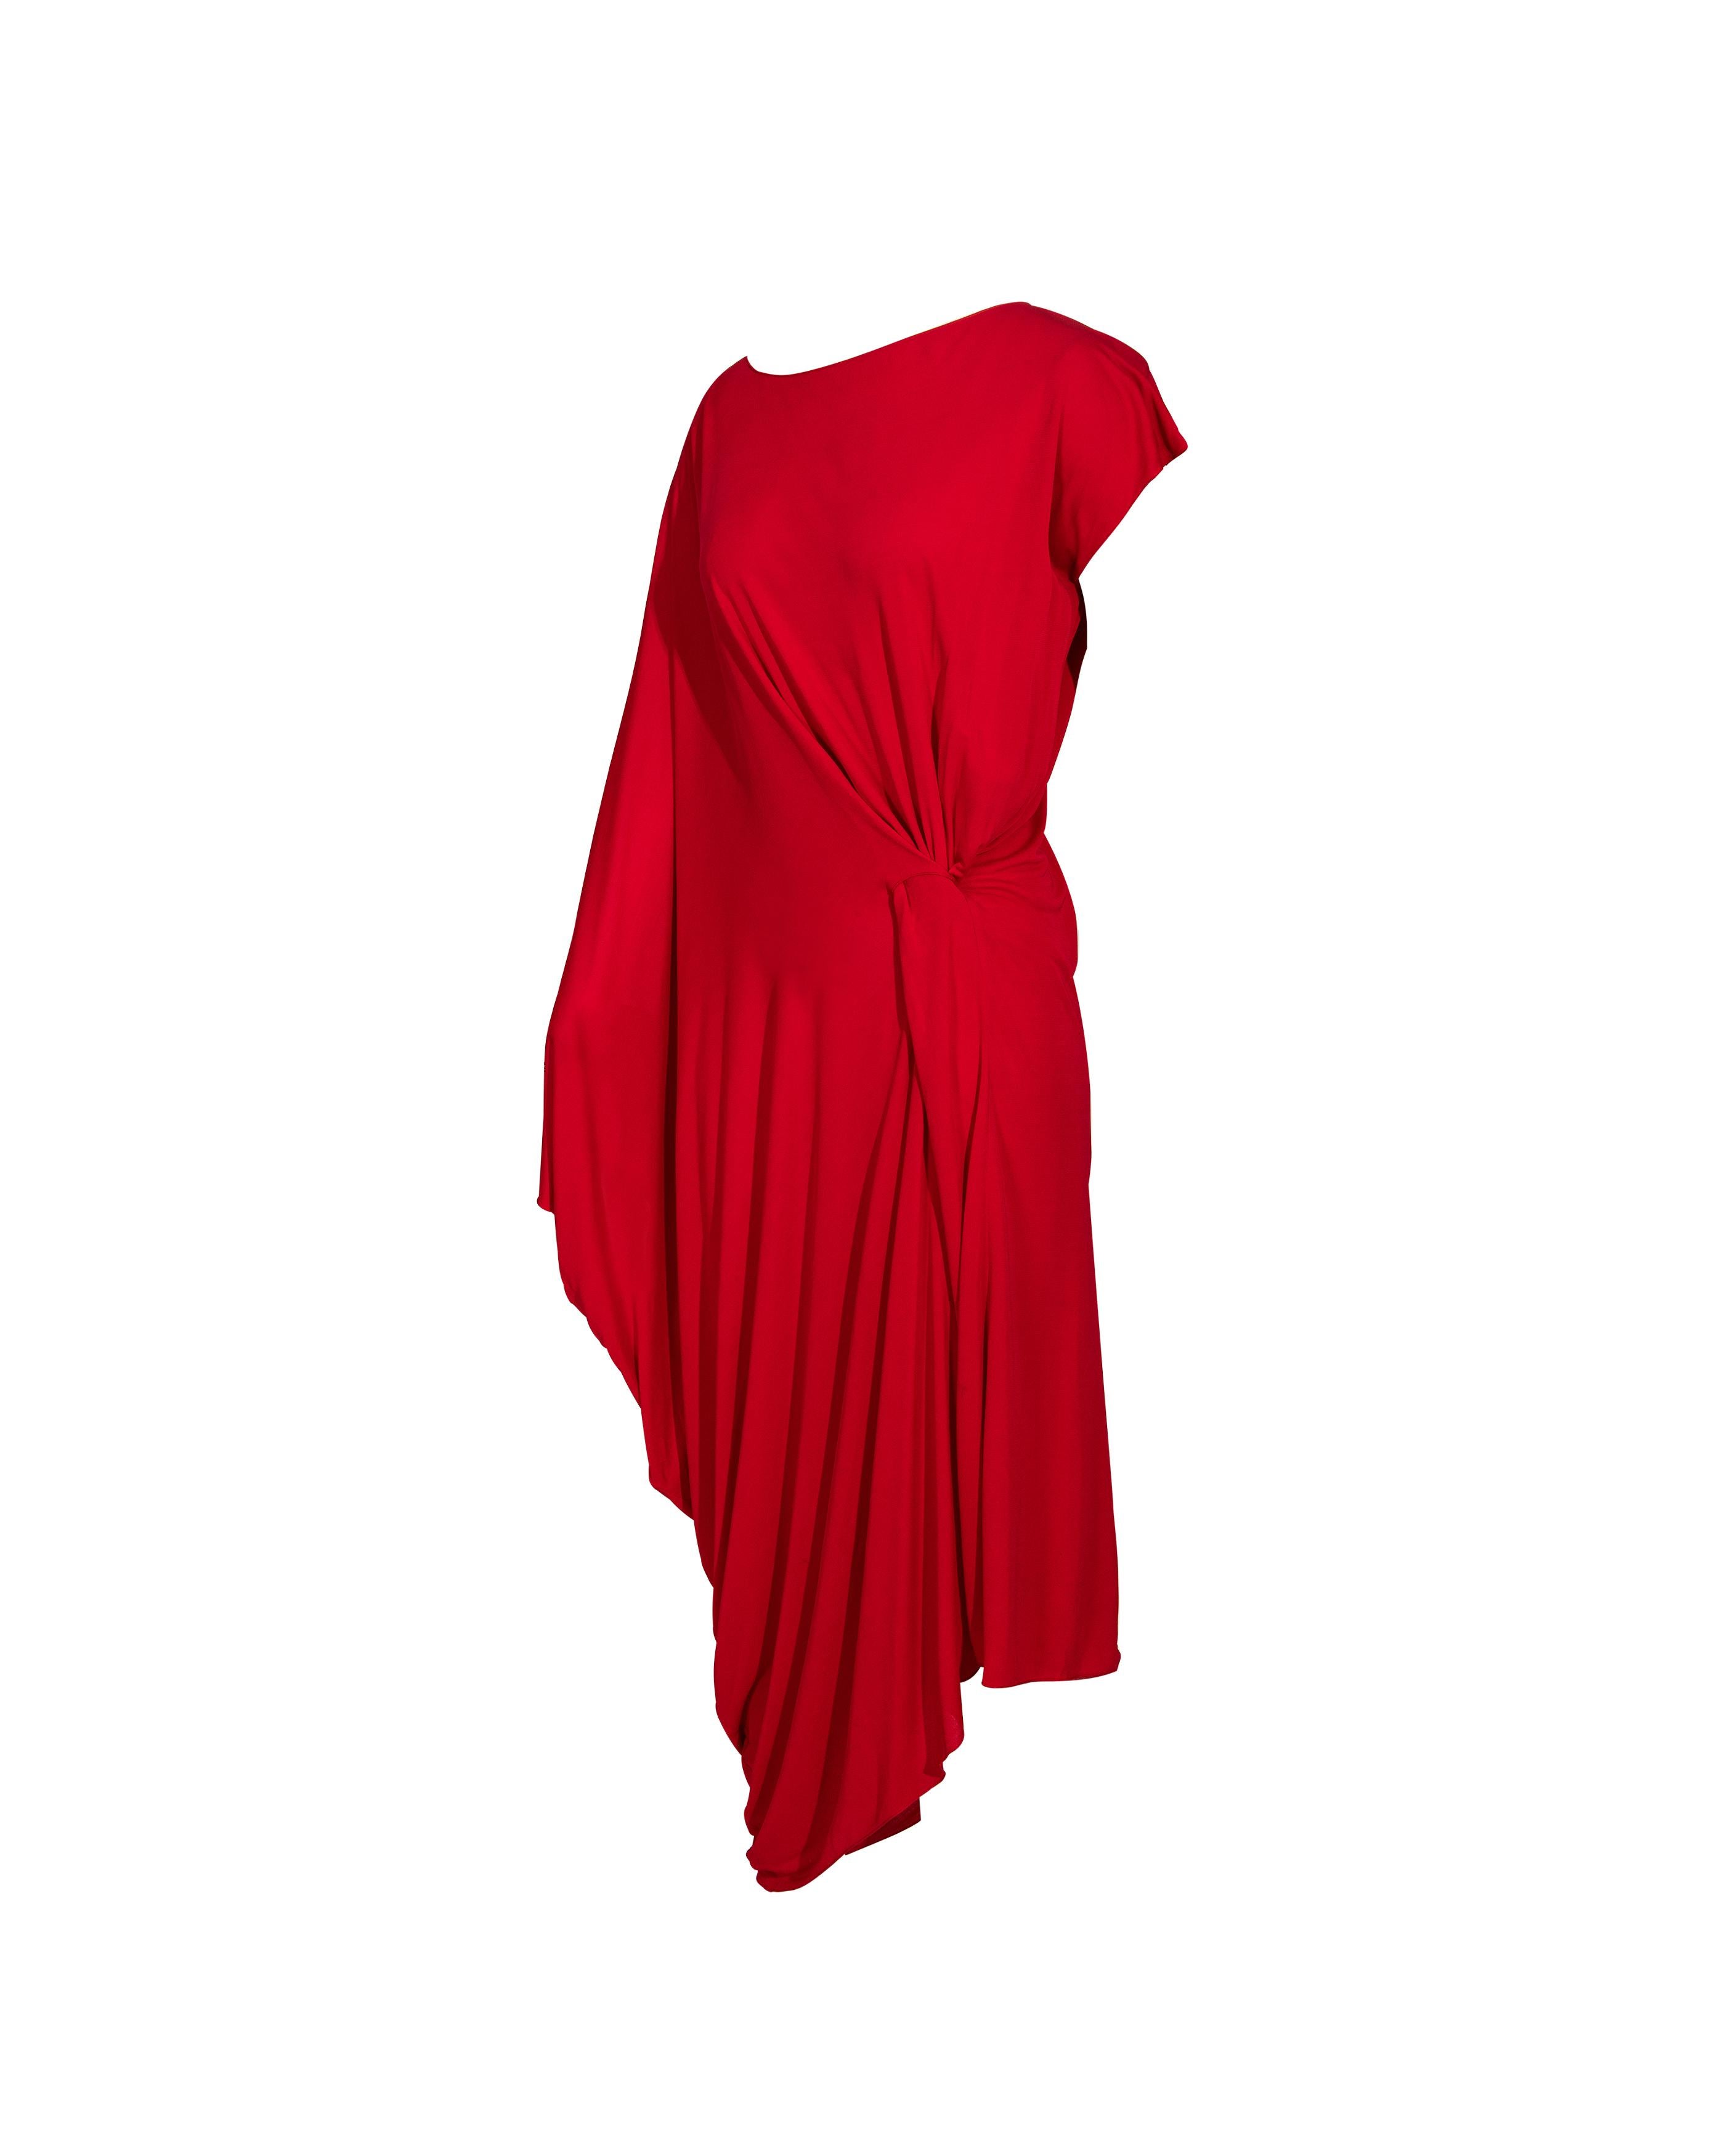 S/S 2009 Maison Martin Margiela Red Jersey Asymmetrical Drape Dress For Sale 1